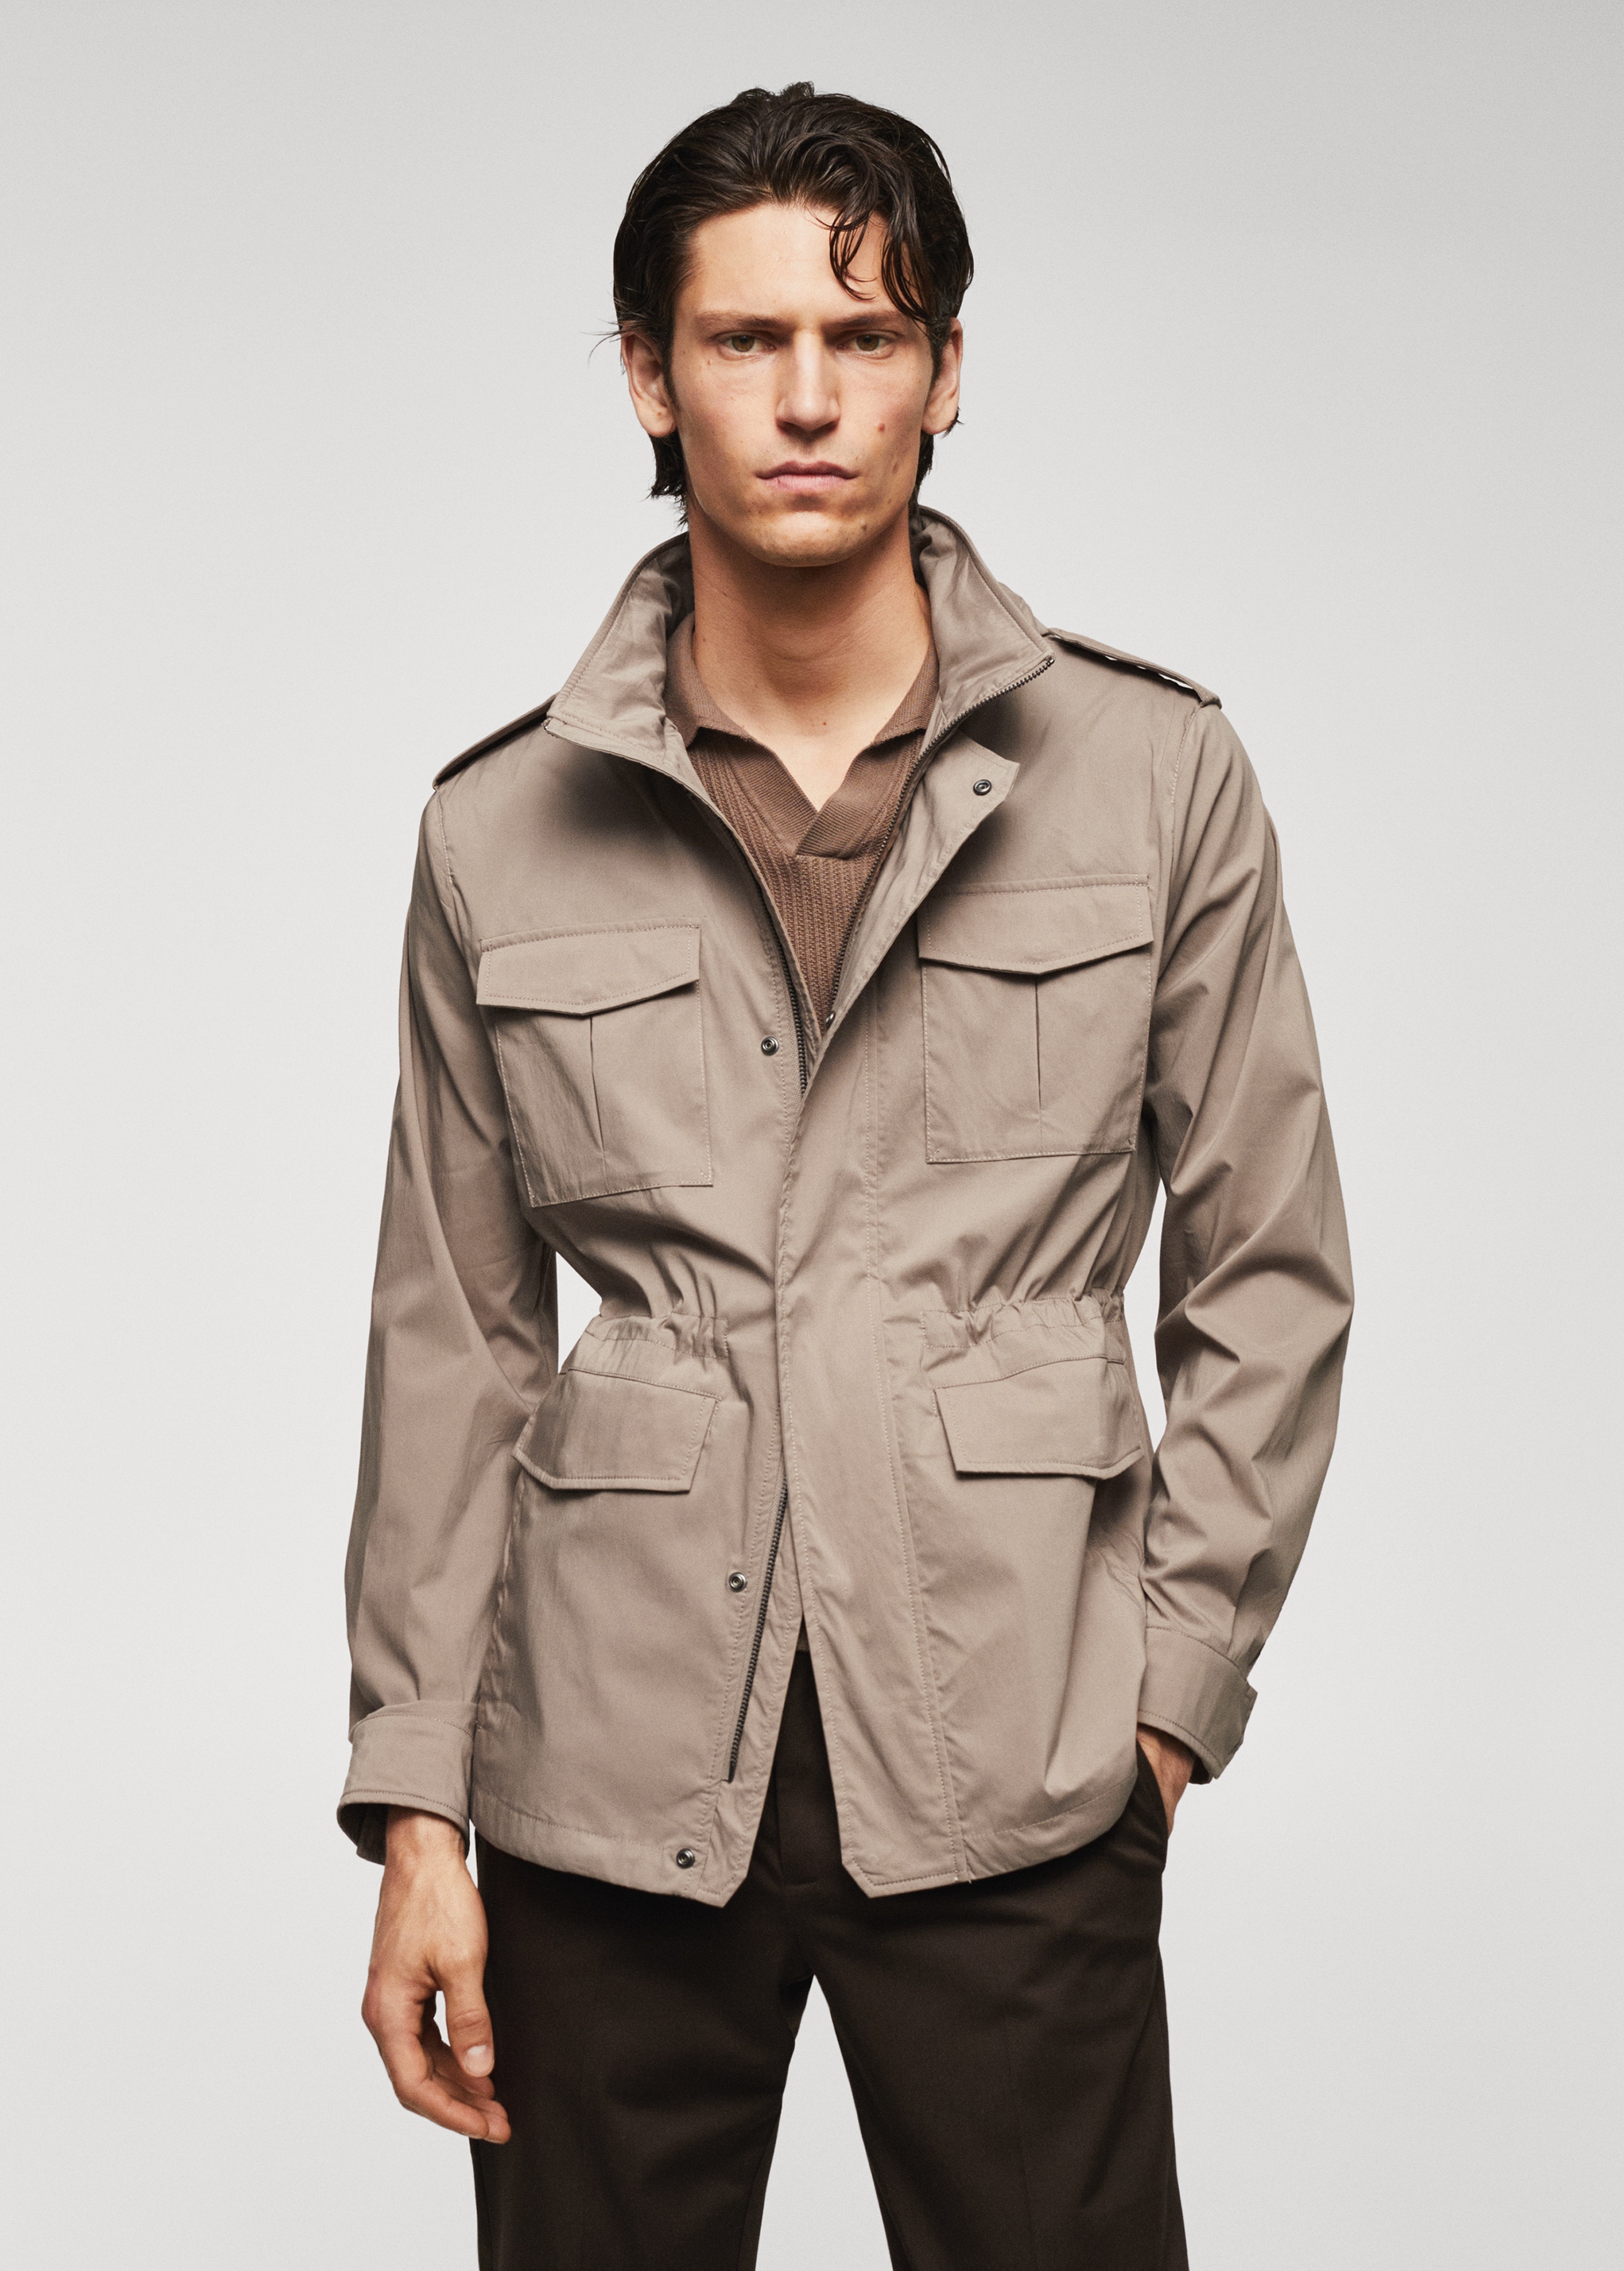 Lightweight saharian jacket with pockets - Medium plane